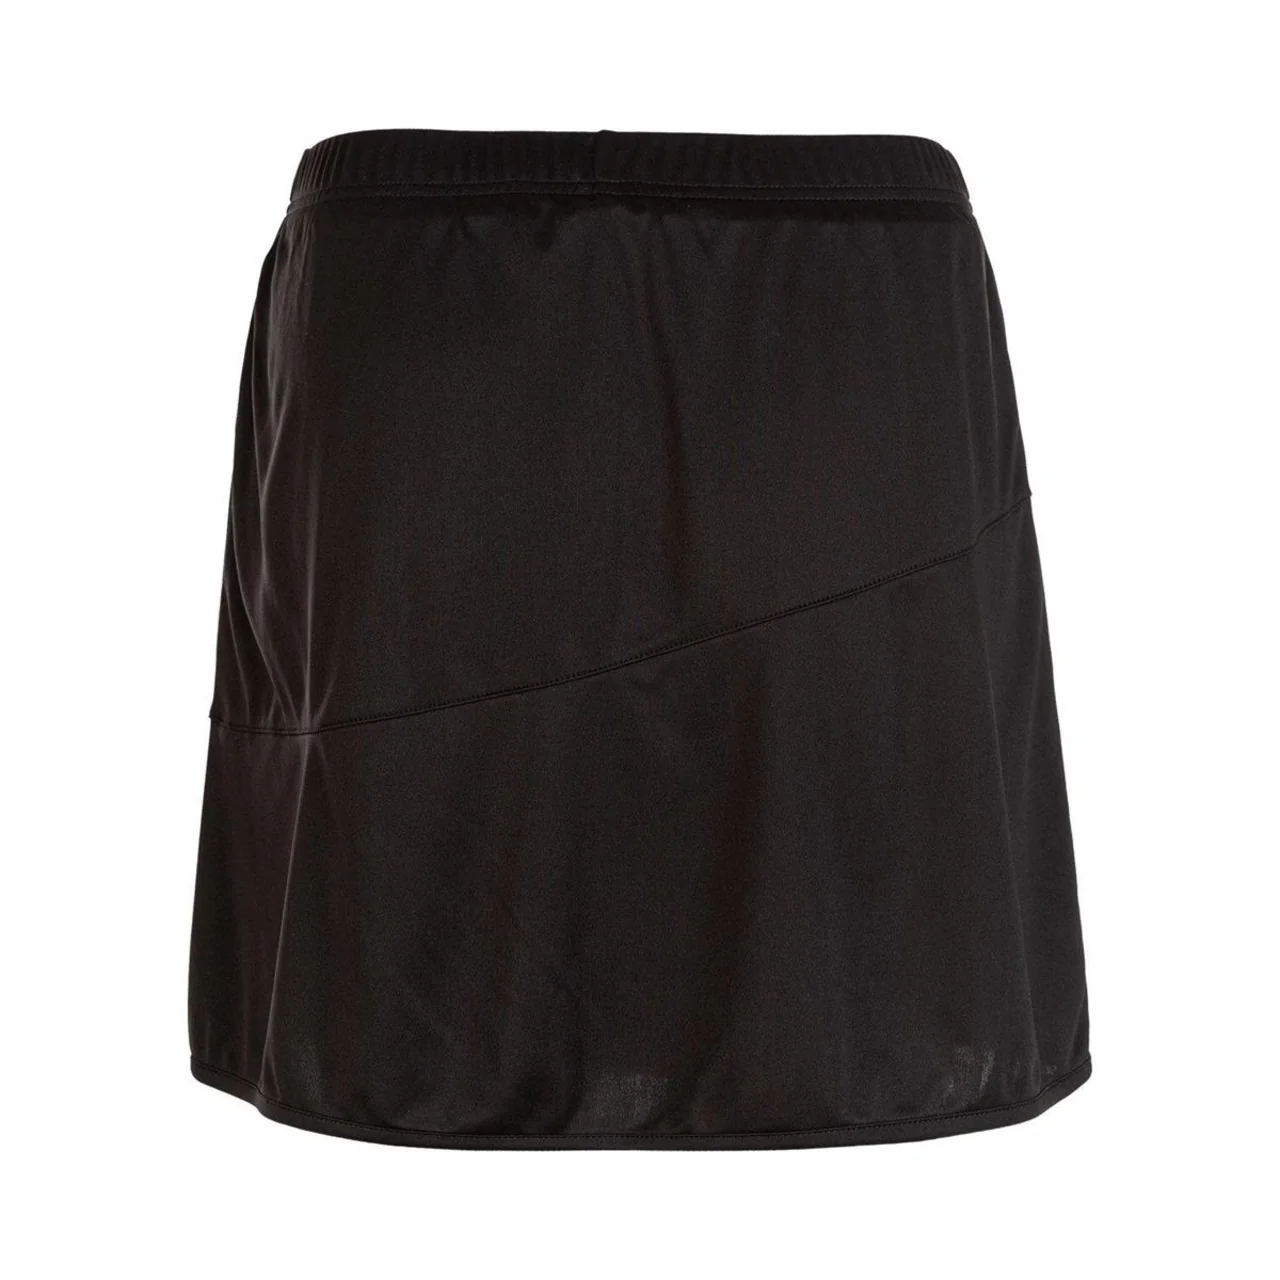 FZ Forza Liddi Skirt Women - Ball Pocket Black